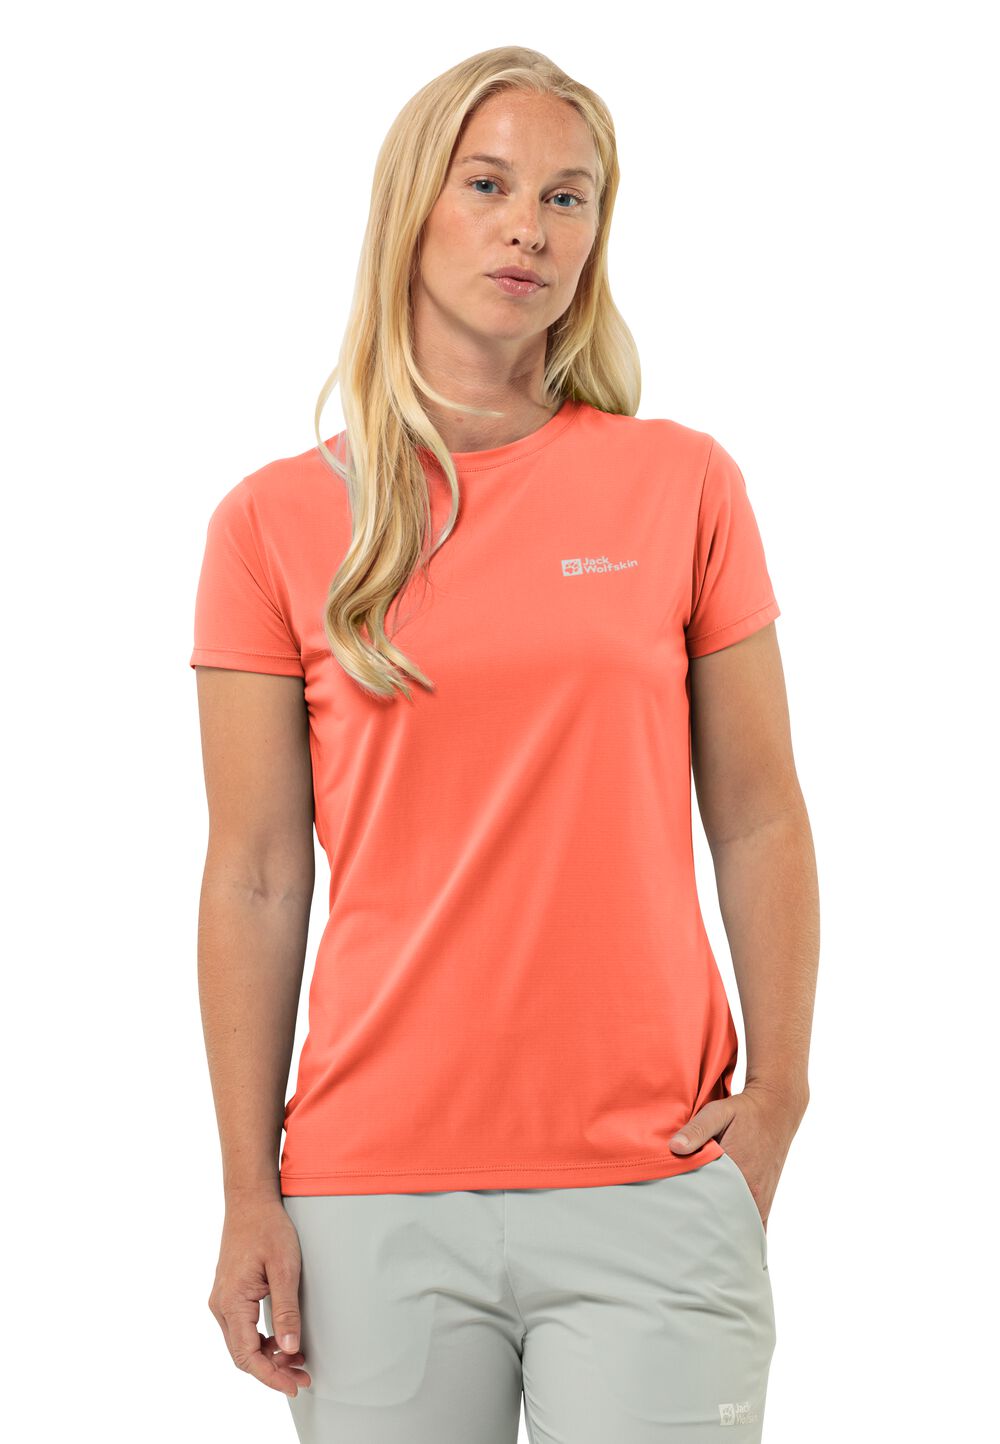 Jack Wolfskin Prelight Trail T-Shirt Women Functioneel shirt Dames M rood digital orange